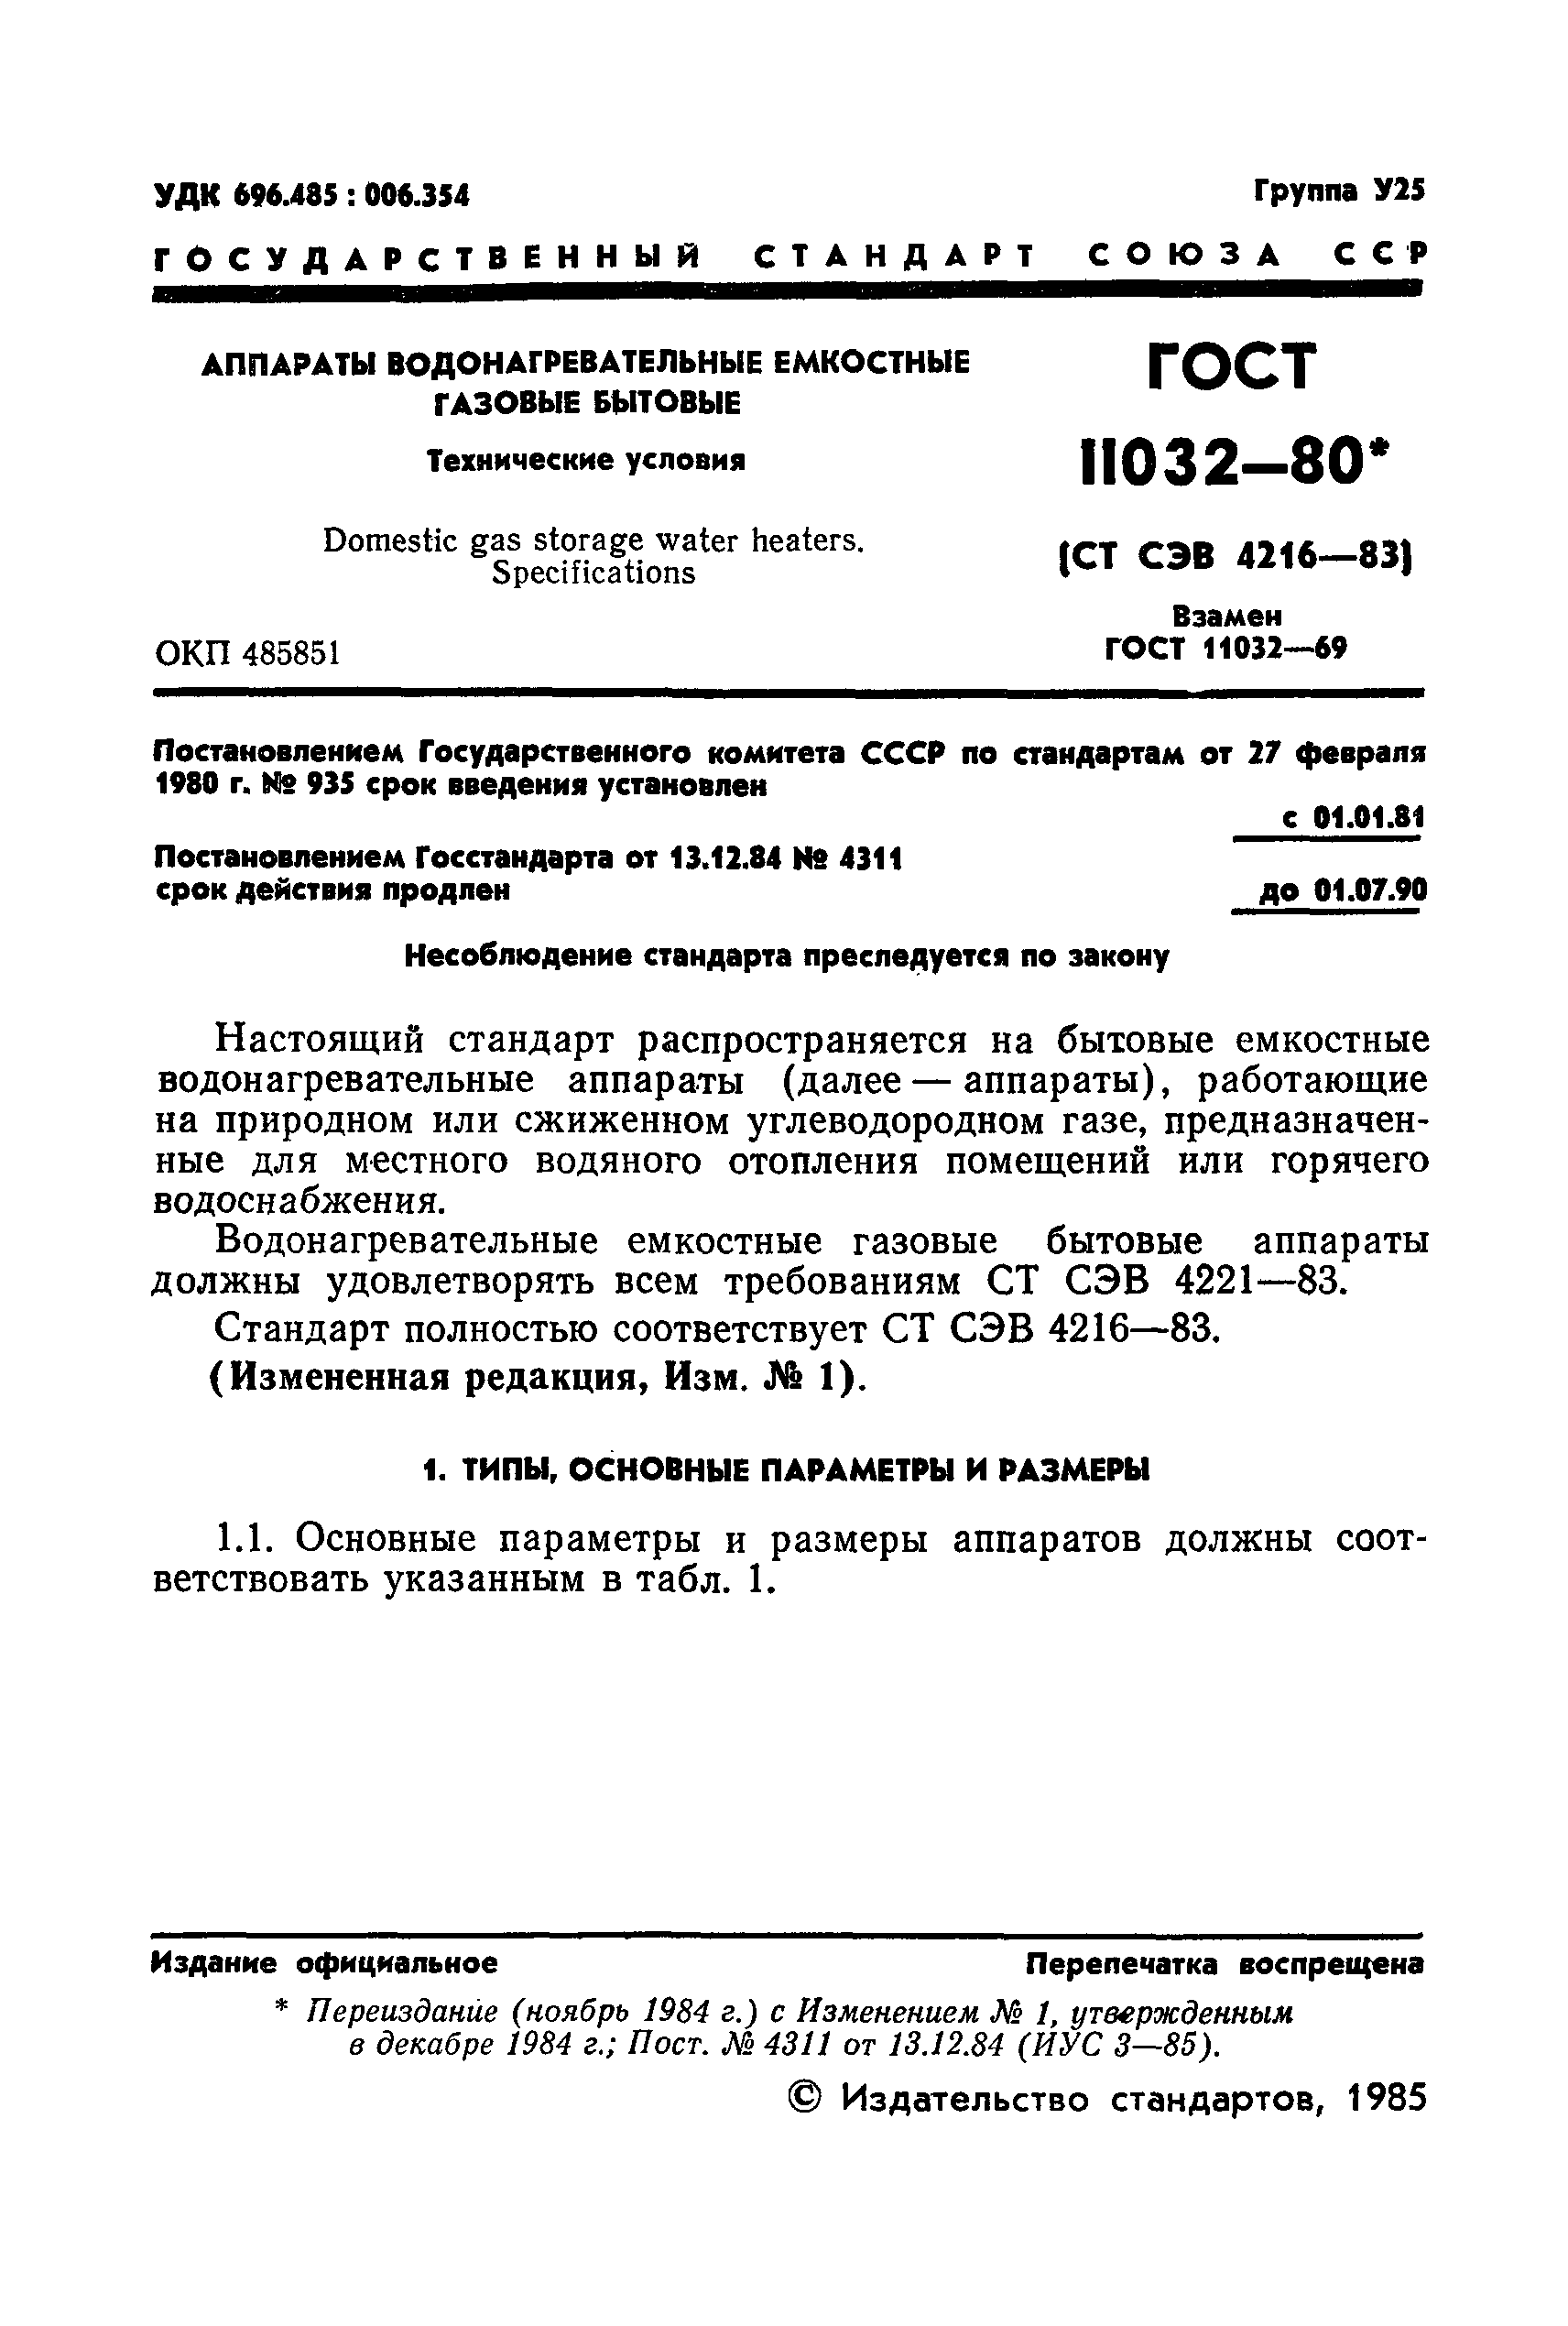 ГОСТ 11032-80